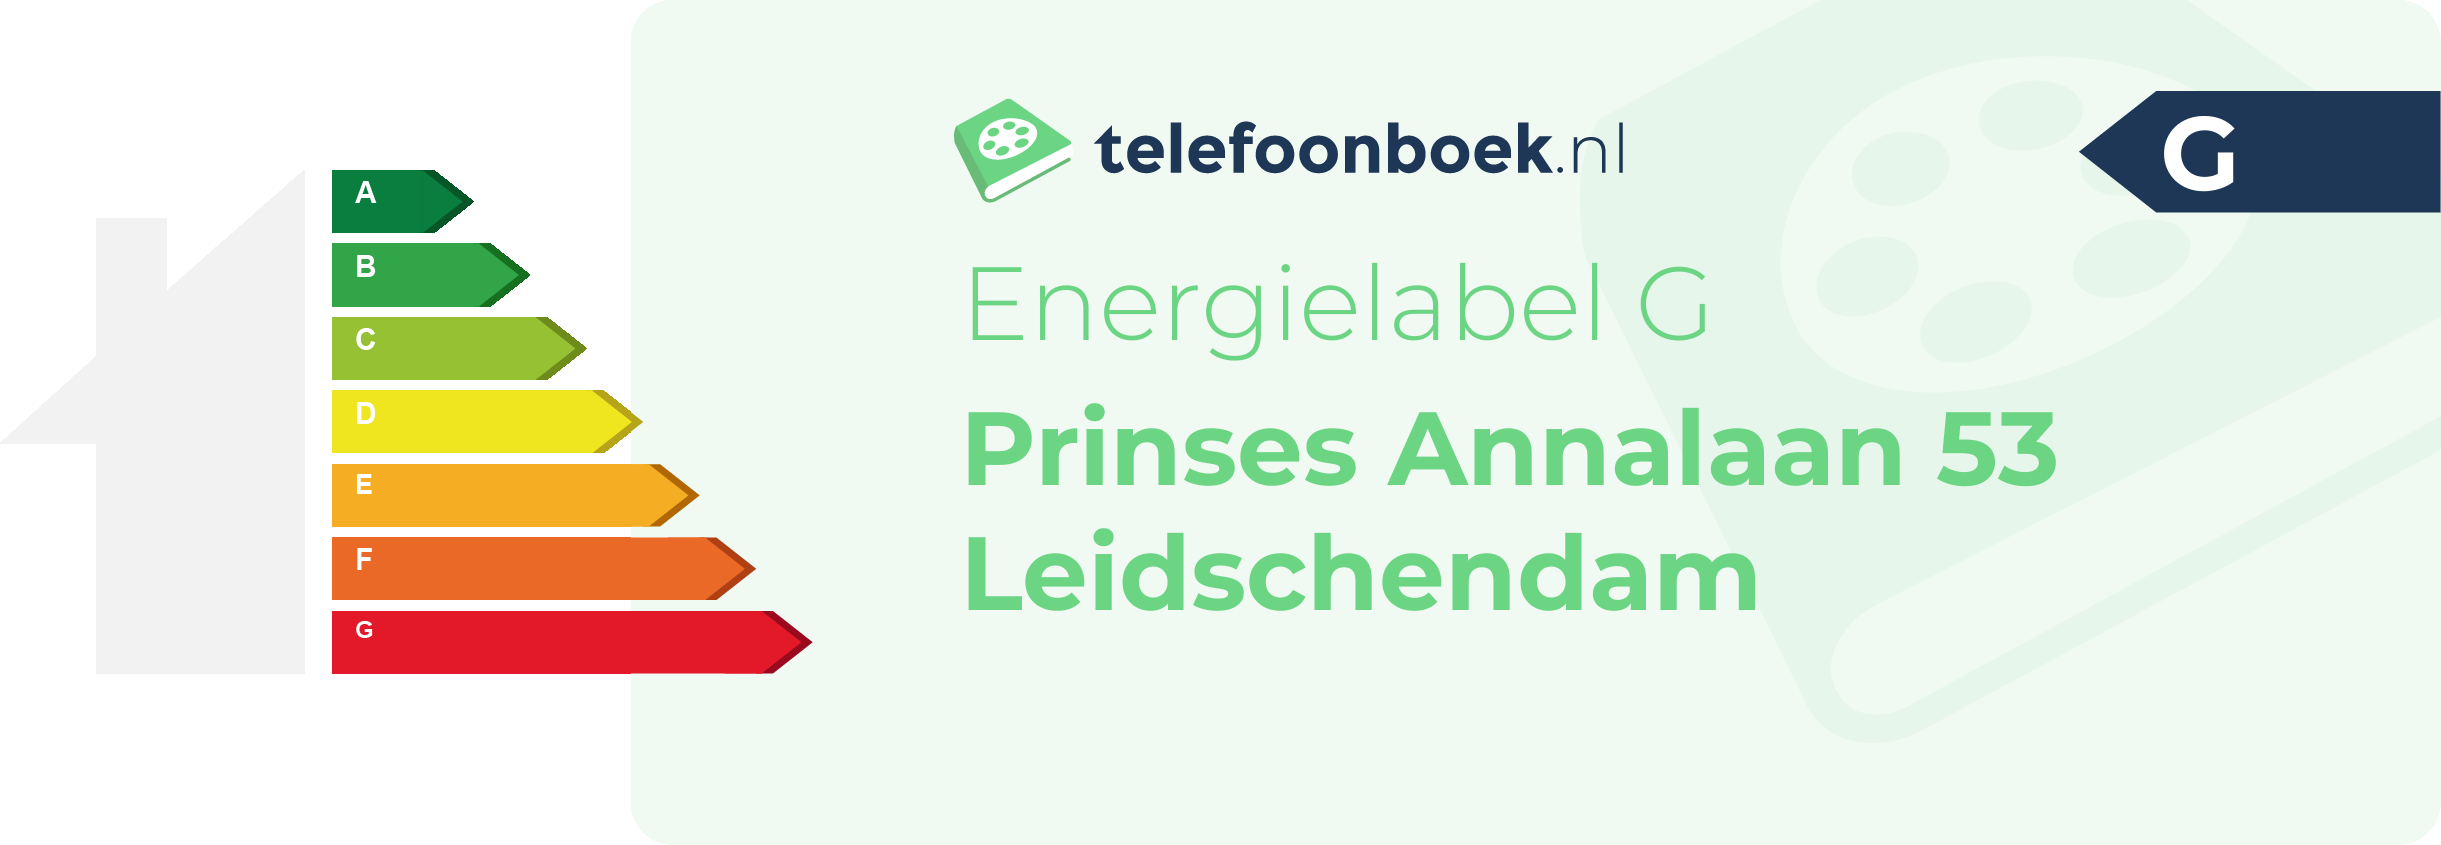 Energielabel Prinses Annalaan 53 Leidschendam